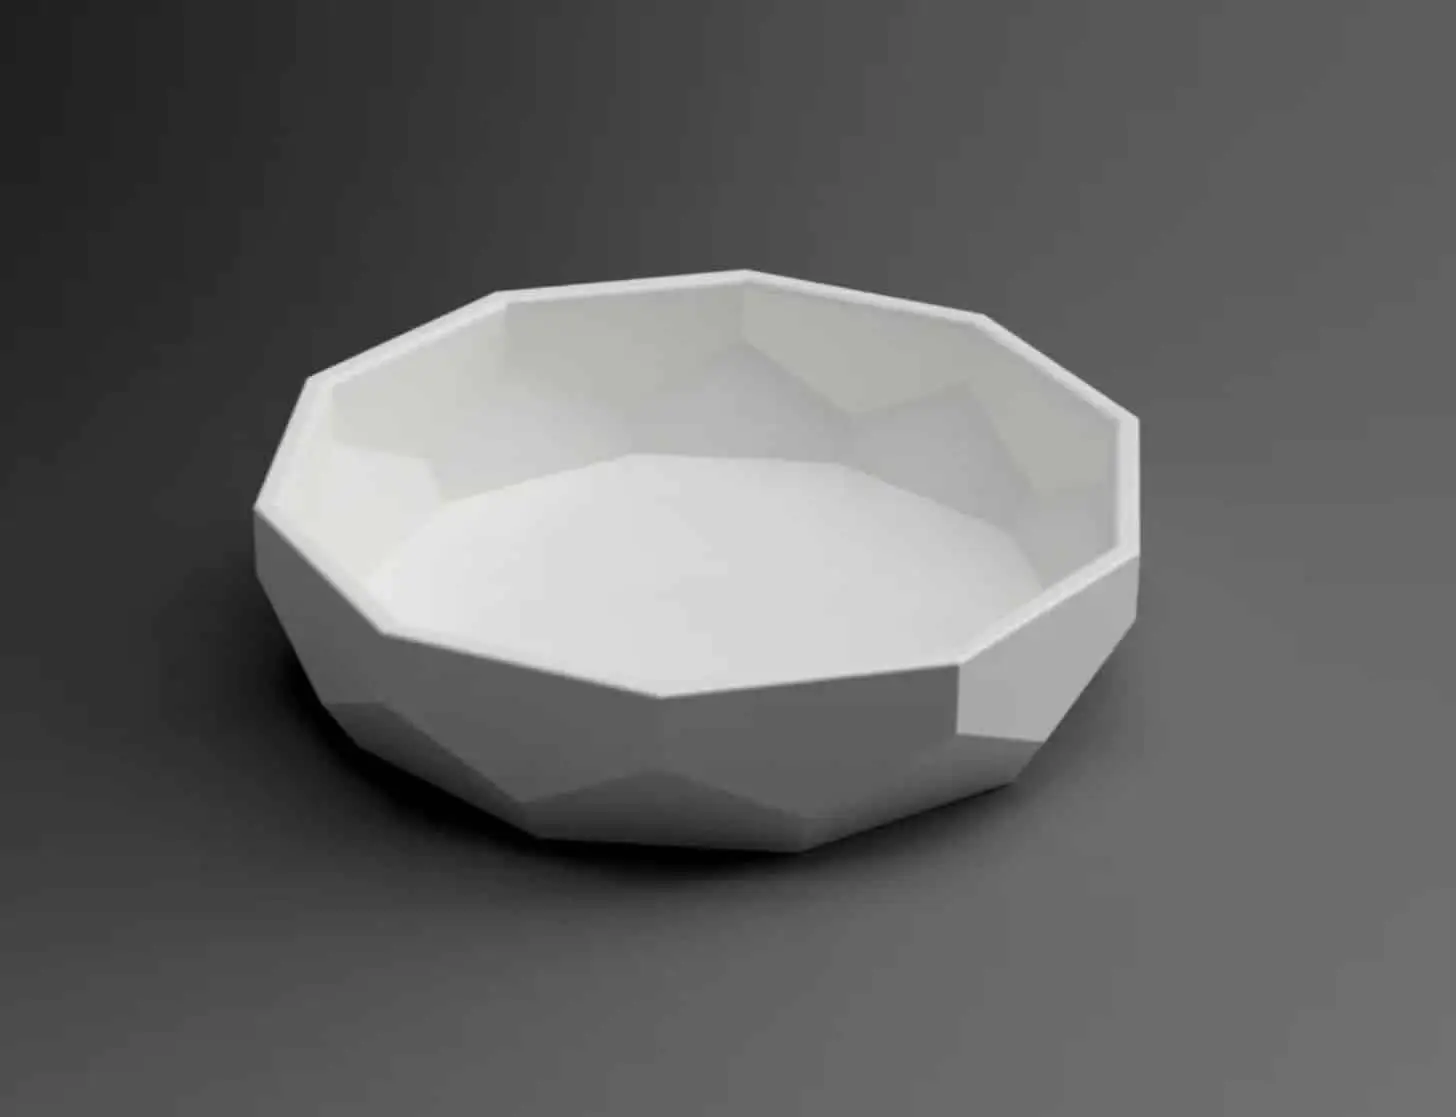 ساخت ظرف مینیمال با پرینت سه بعدی